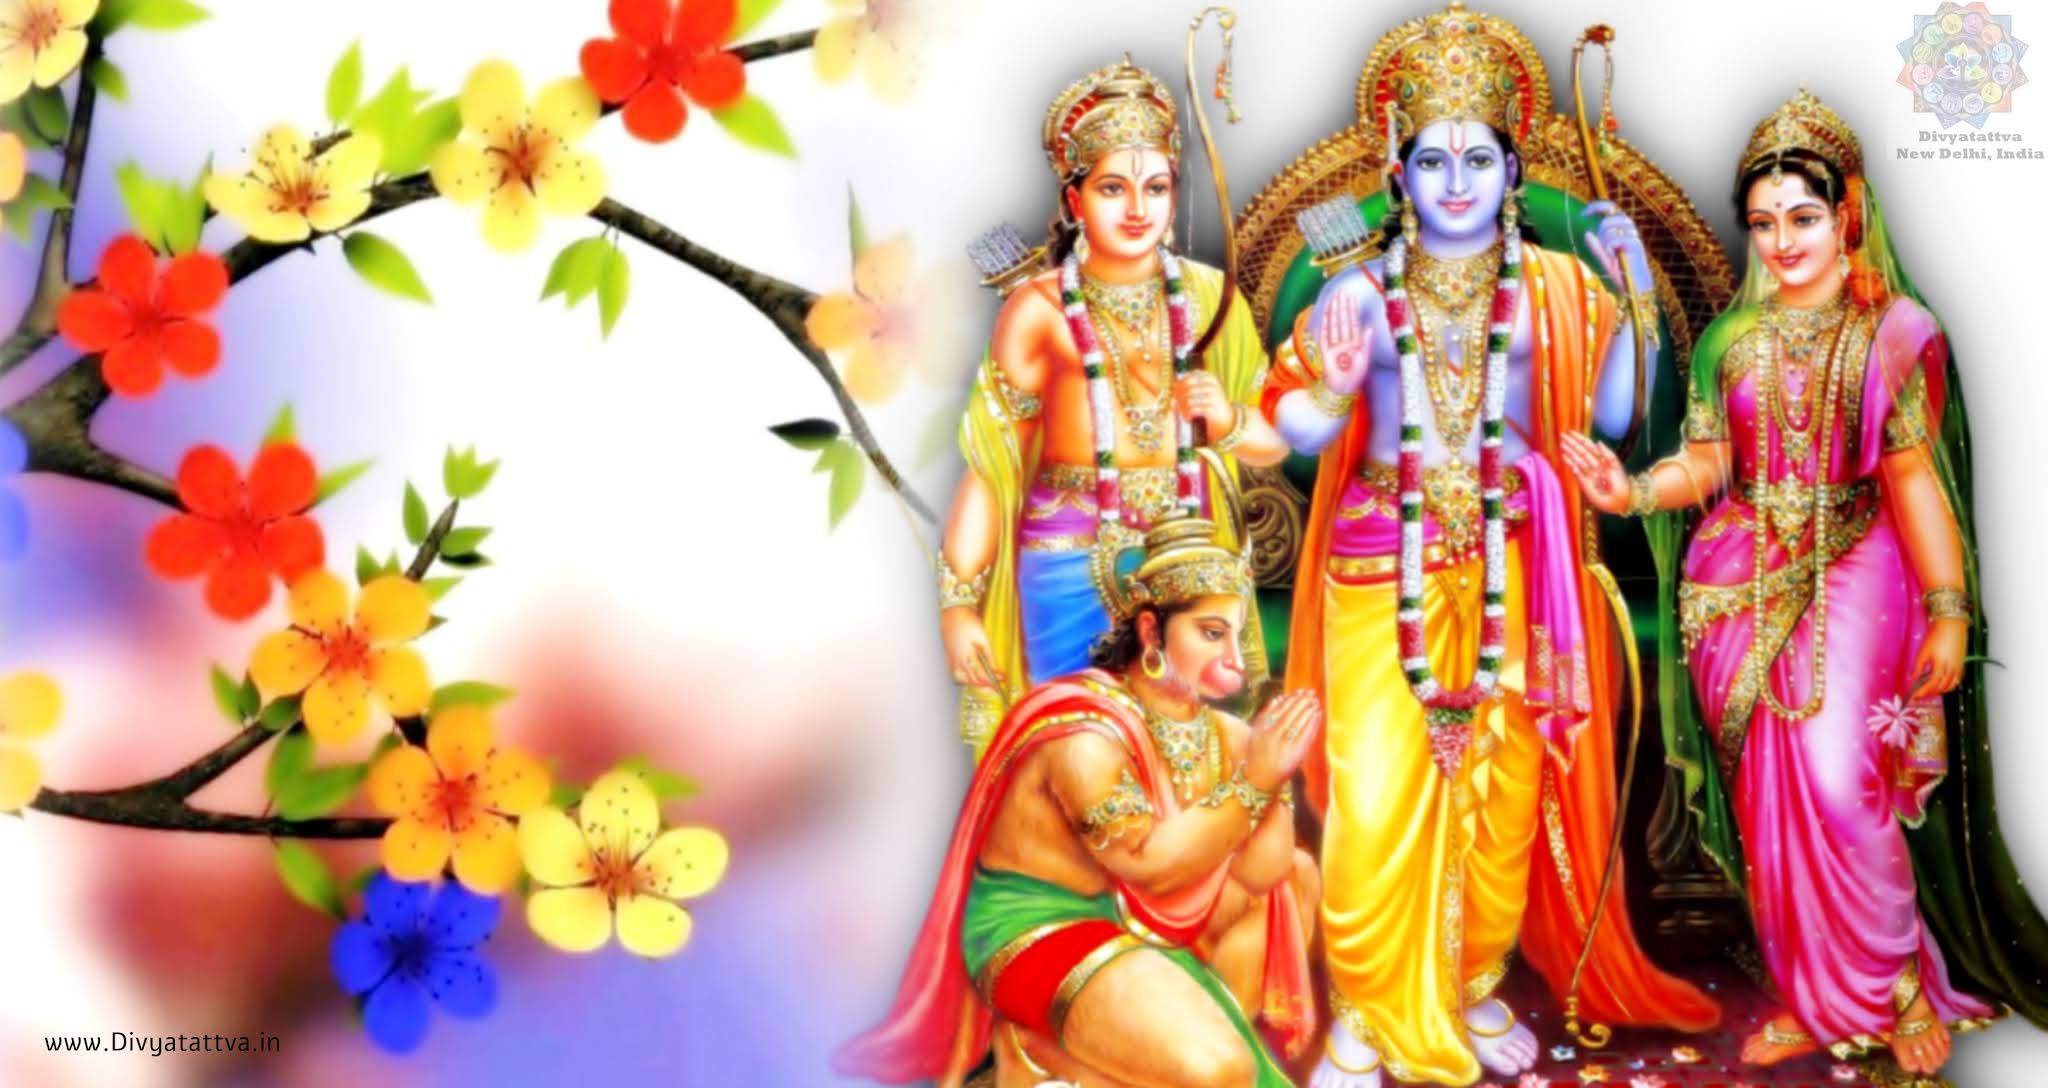 Beautiful Pictures of Lord Rama, Sita, Hanuman, Laxman or Rama Parivar Wallpapers